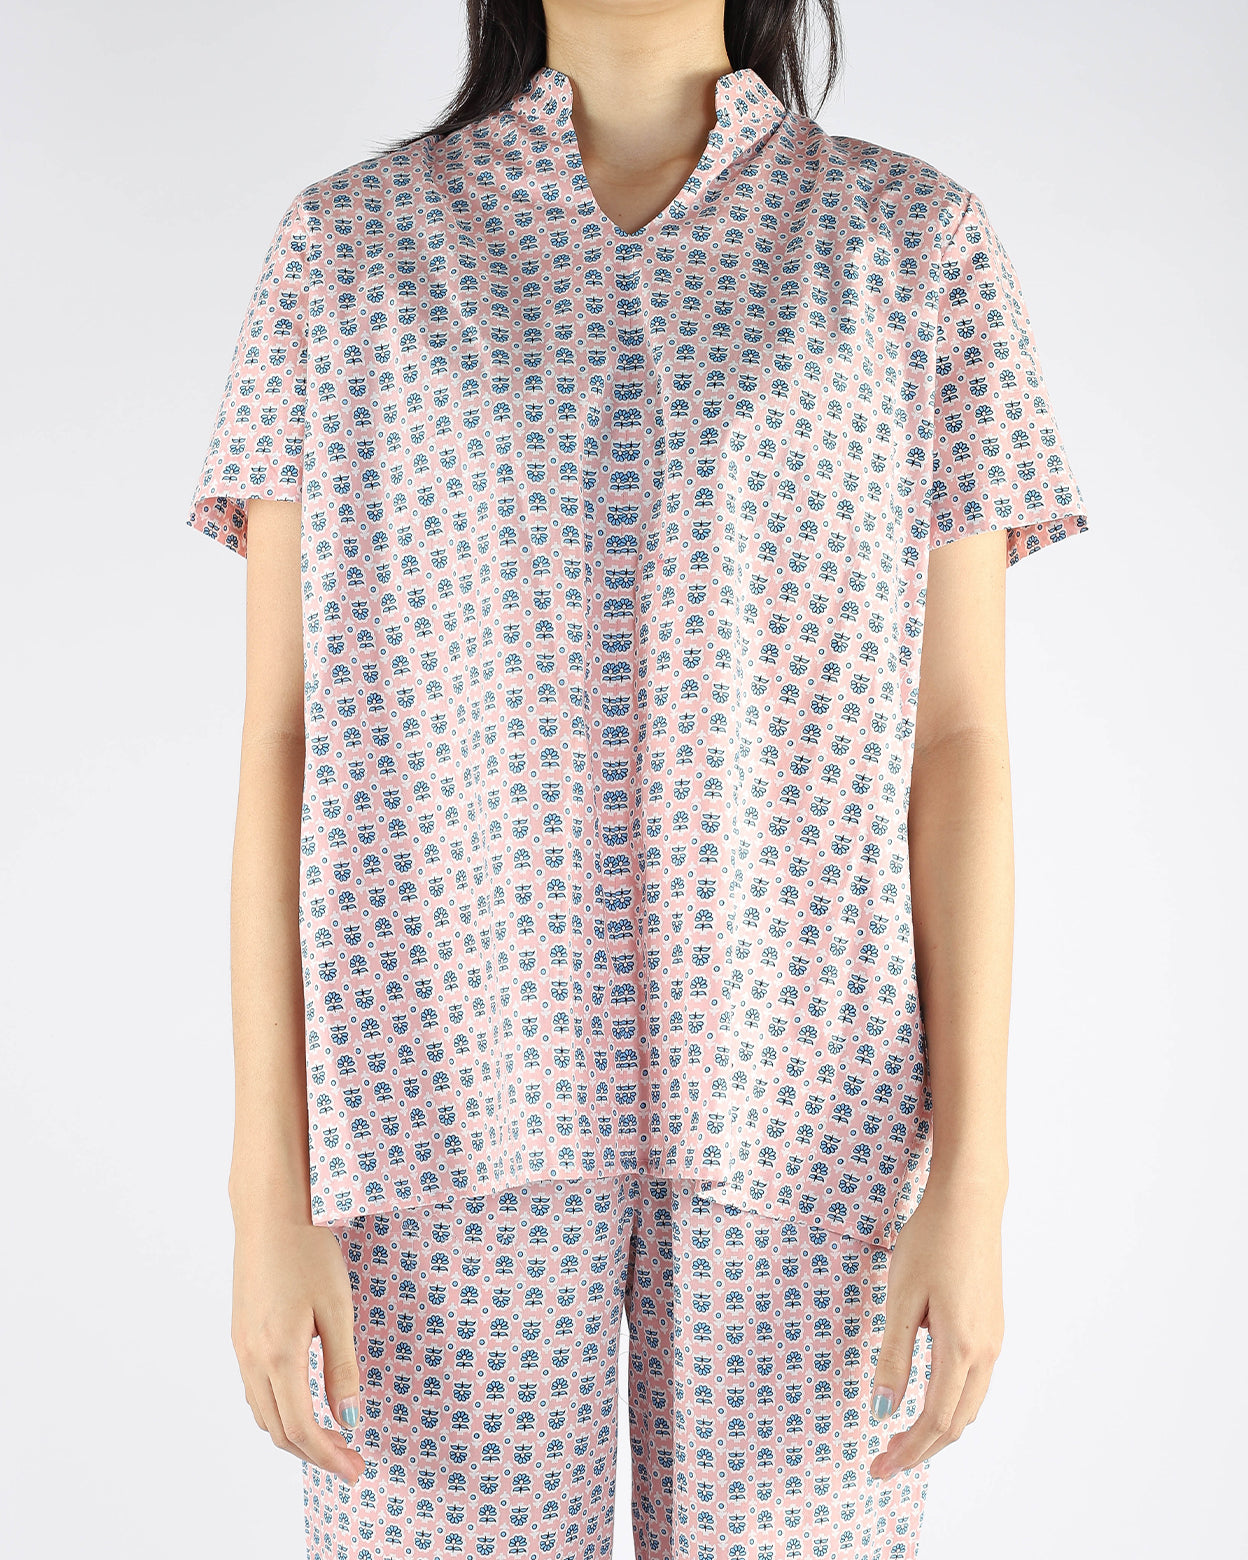 Pink Floral Inpatient Adaptive Pyjama Top